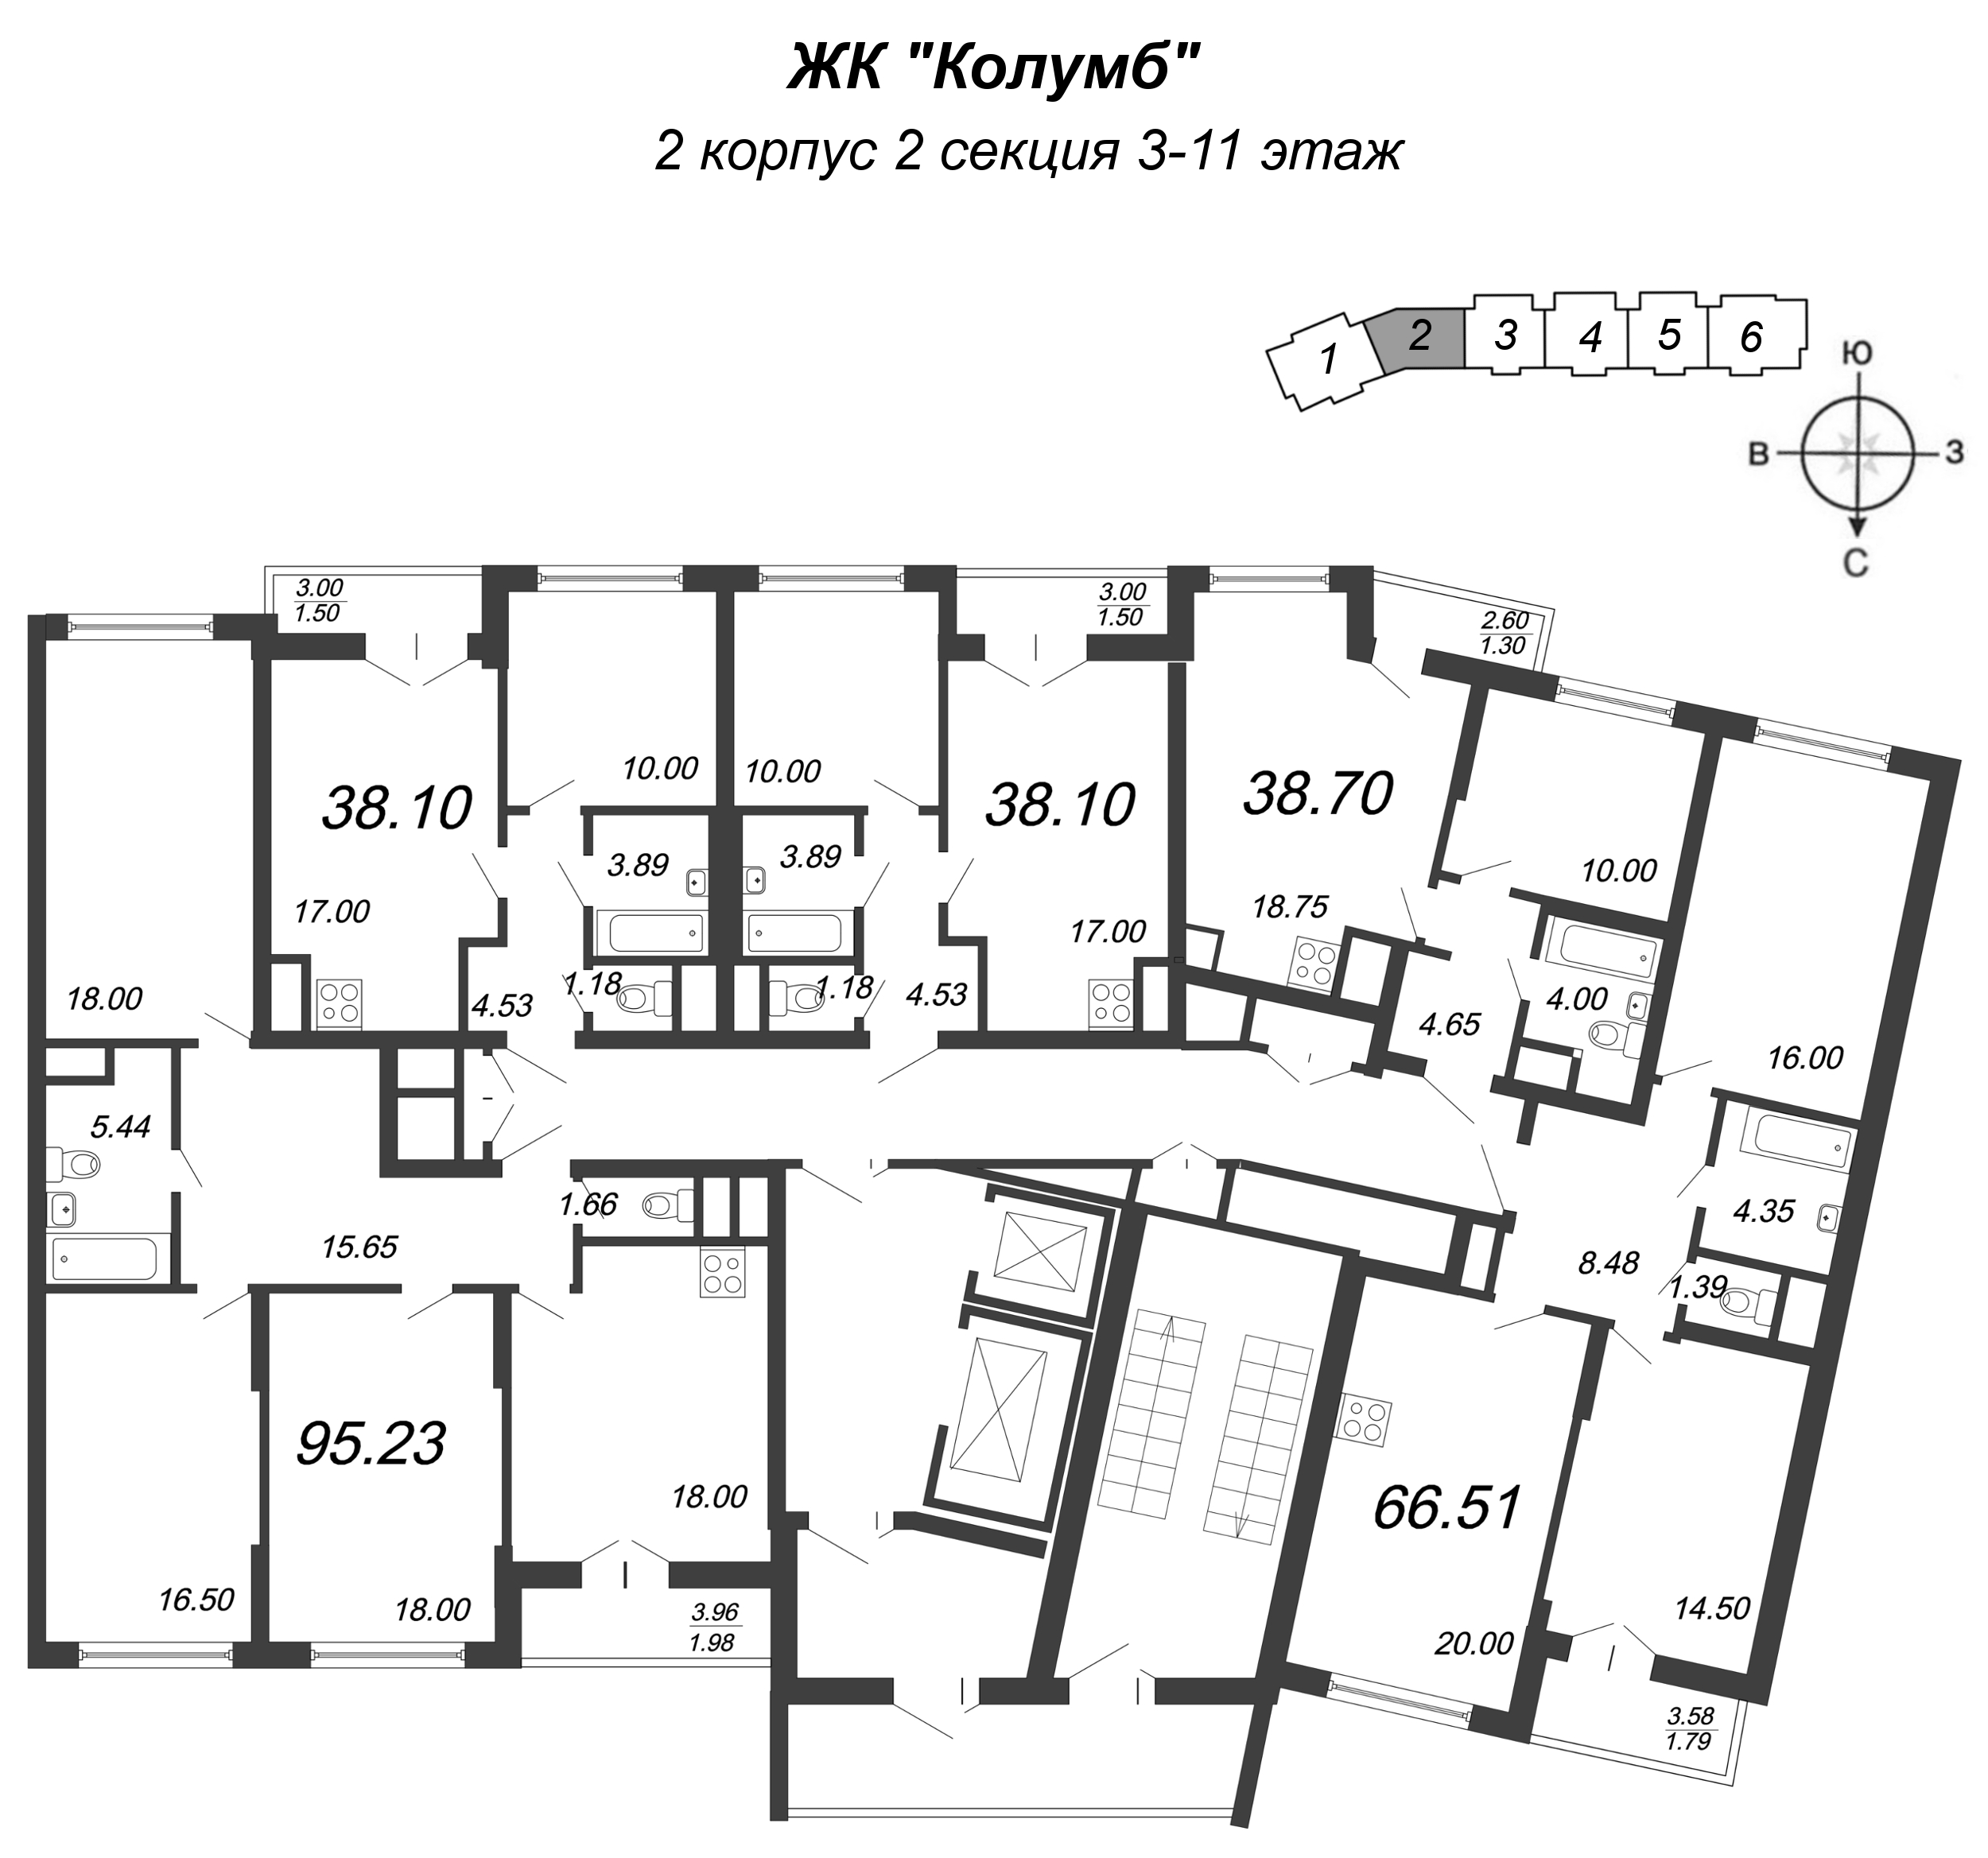 4-комнатная (Евро) квартира, 96.3 м² в ЖК "Колумб" - планировка этажа